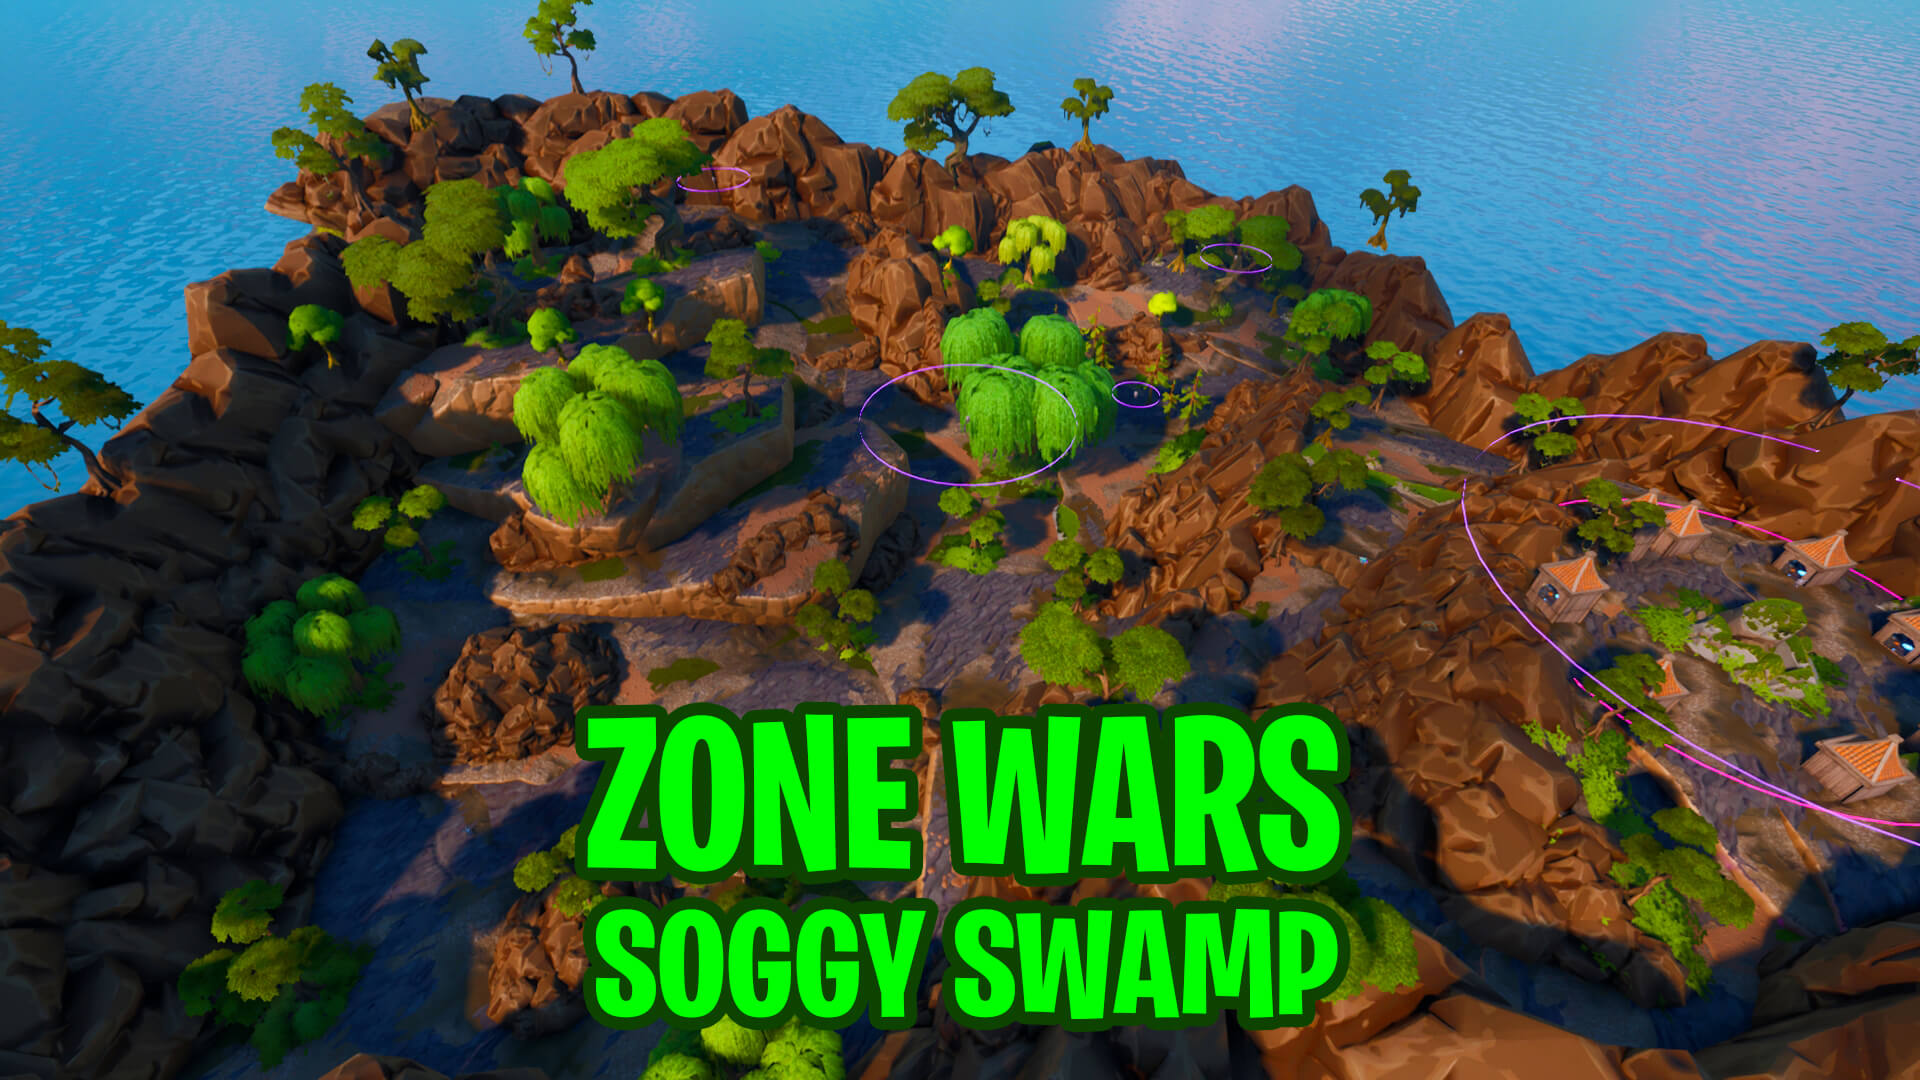 ZONE WARS - SOGGY SWAMP